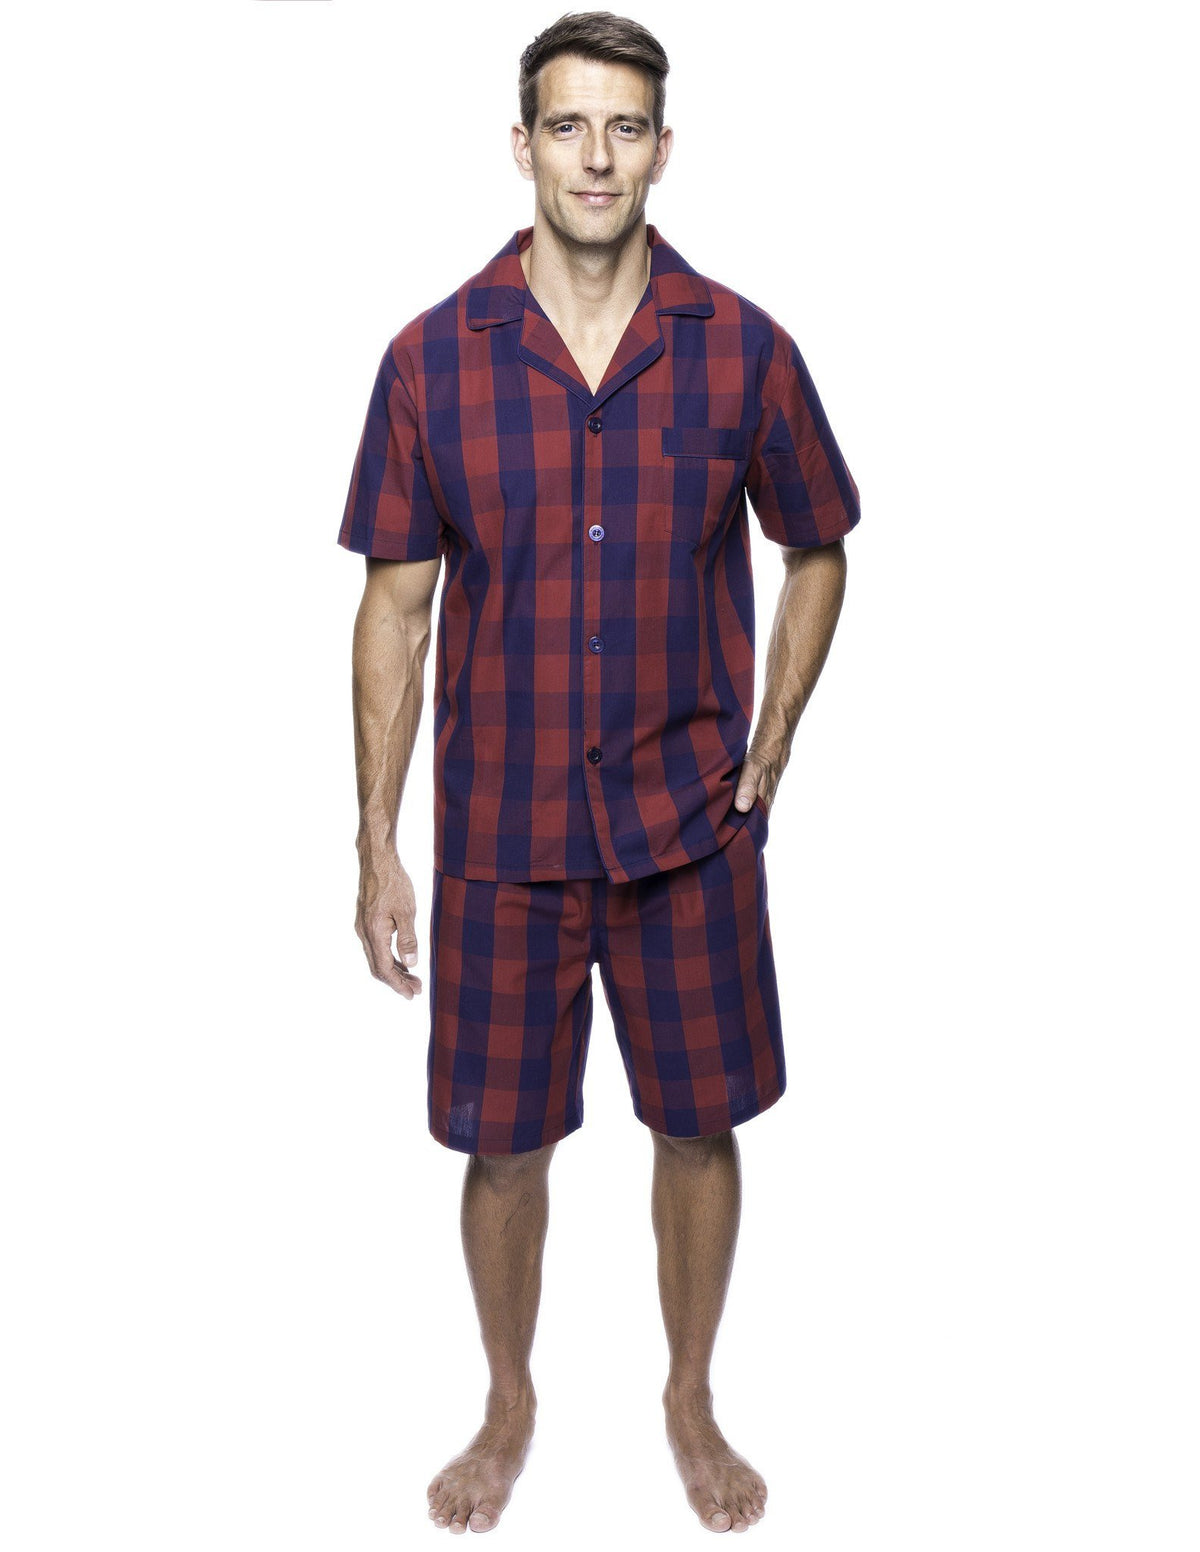 Men's 100% Woven Cotton Short Pajama Sleepwear Set - Gingham Red/Navy